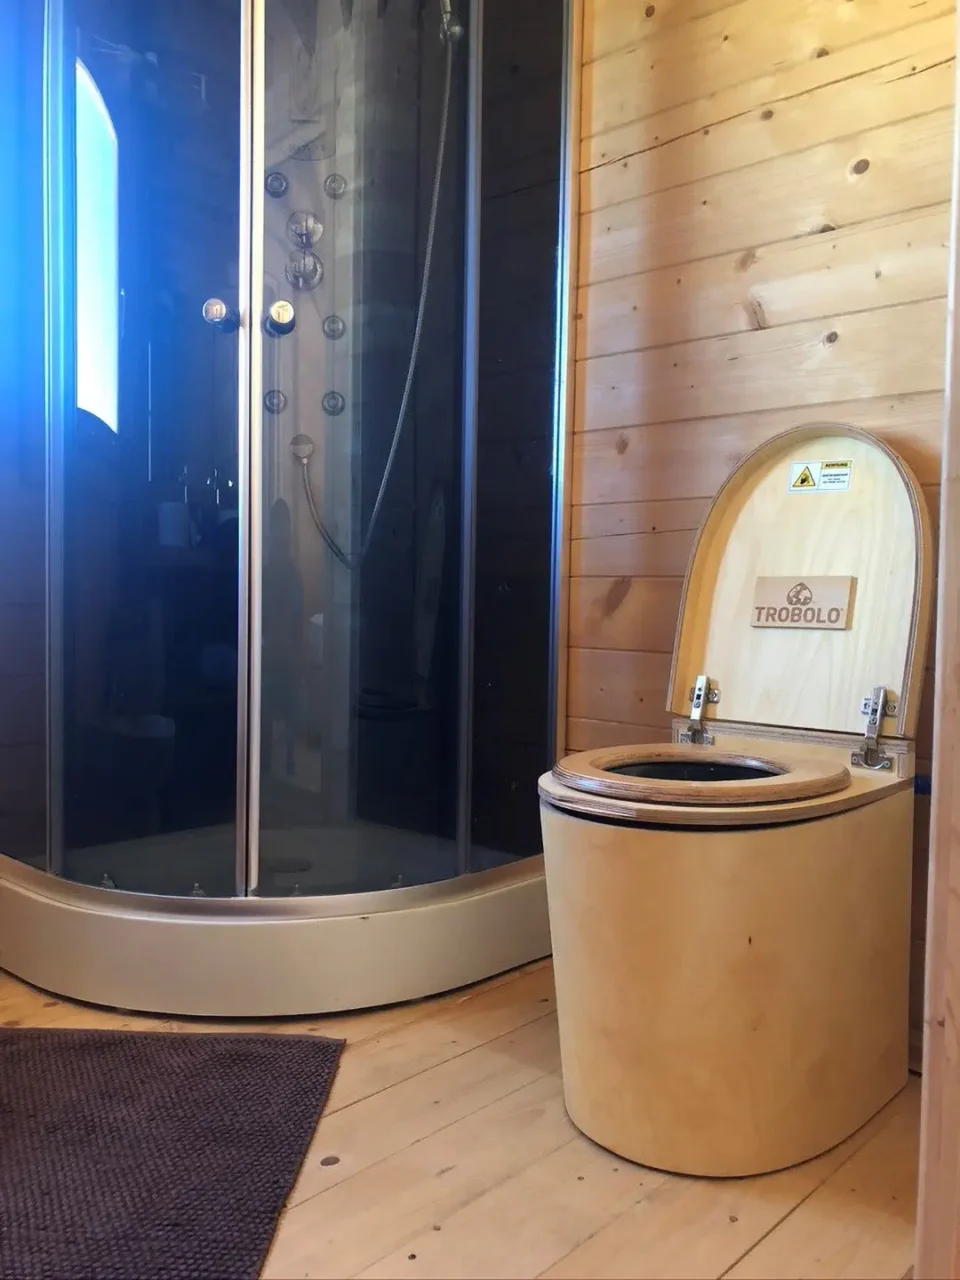 Toilette mobile de camping TeraGO en kit I TROBOLO